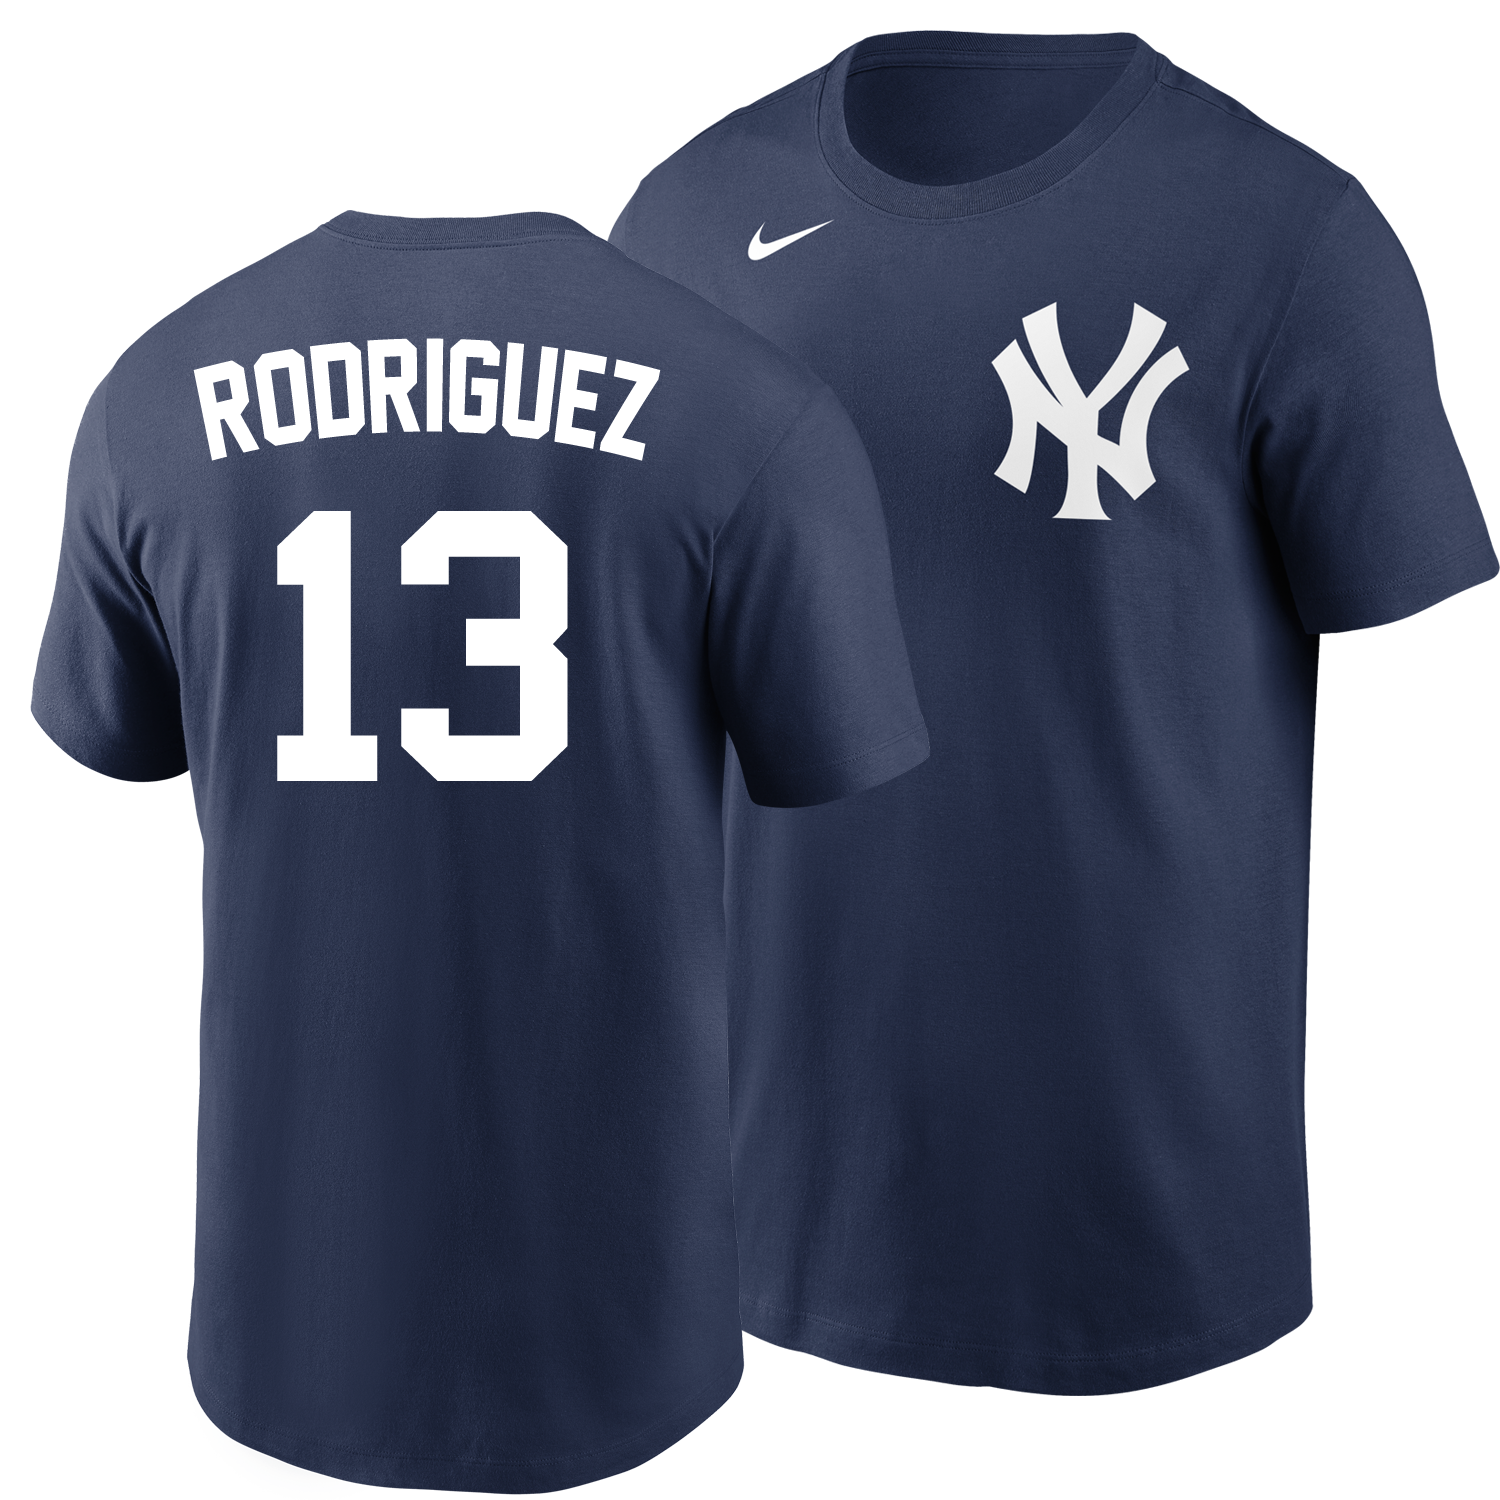 True Fan, Shirts, New York Yankees Jersey Rodriguez 3 Mens Sz Large 4244